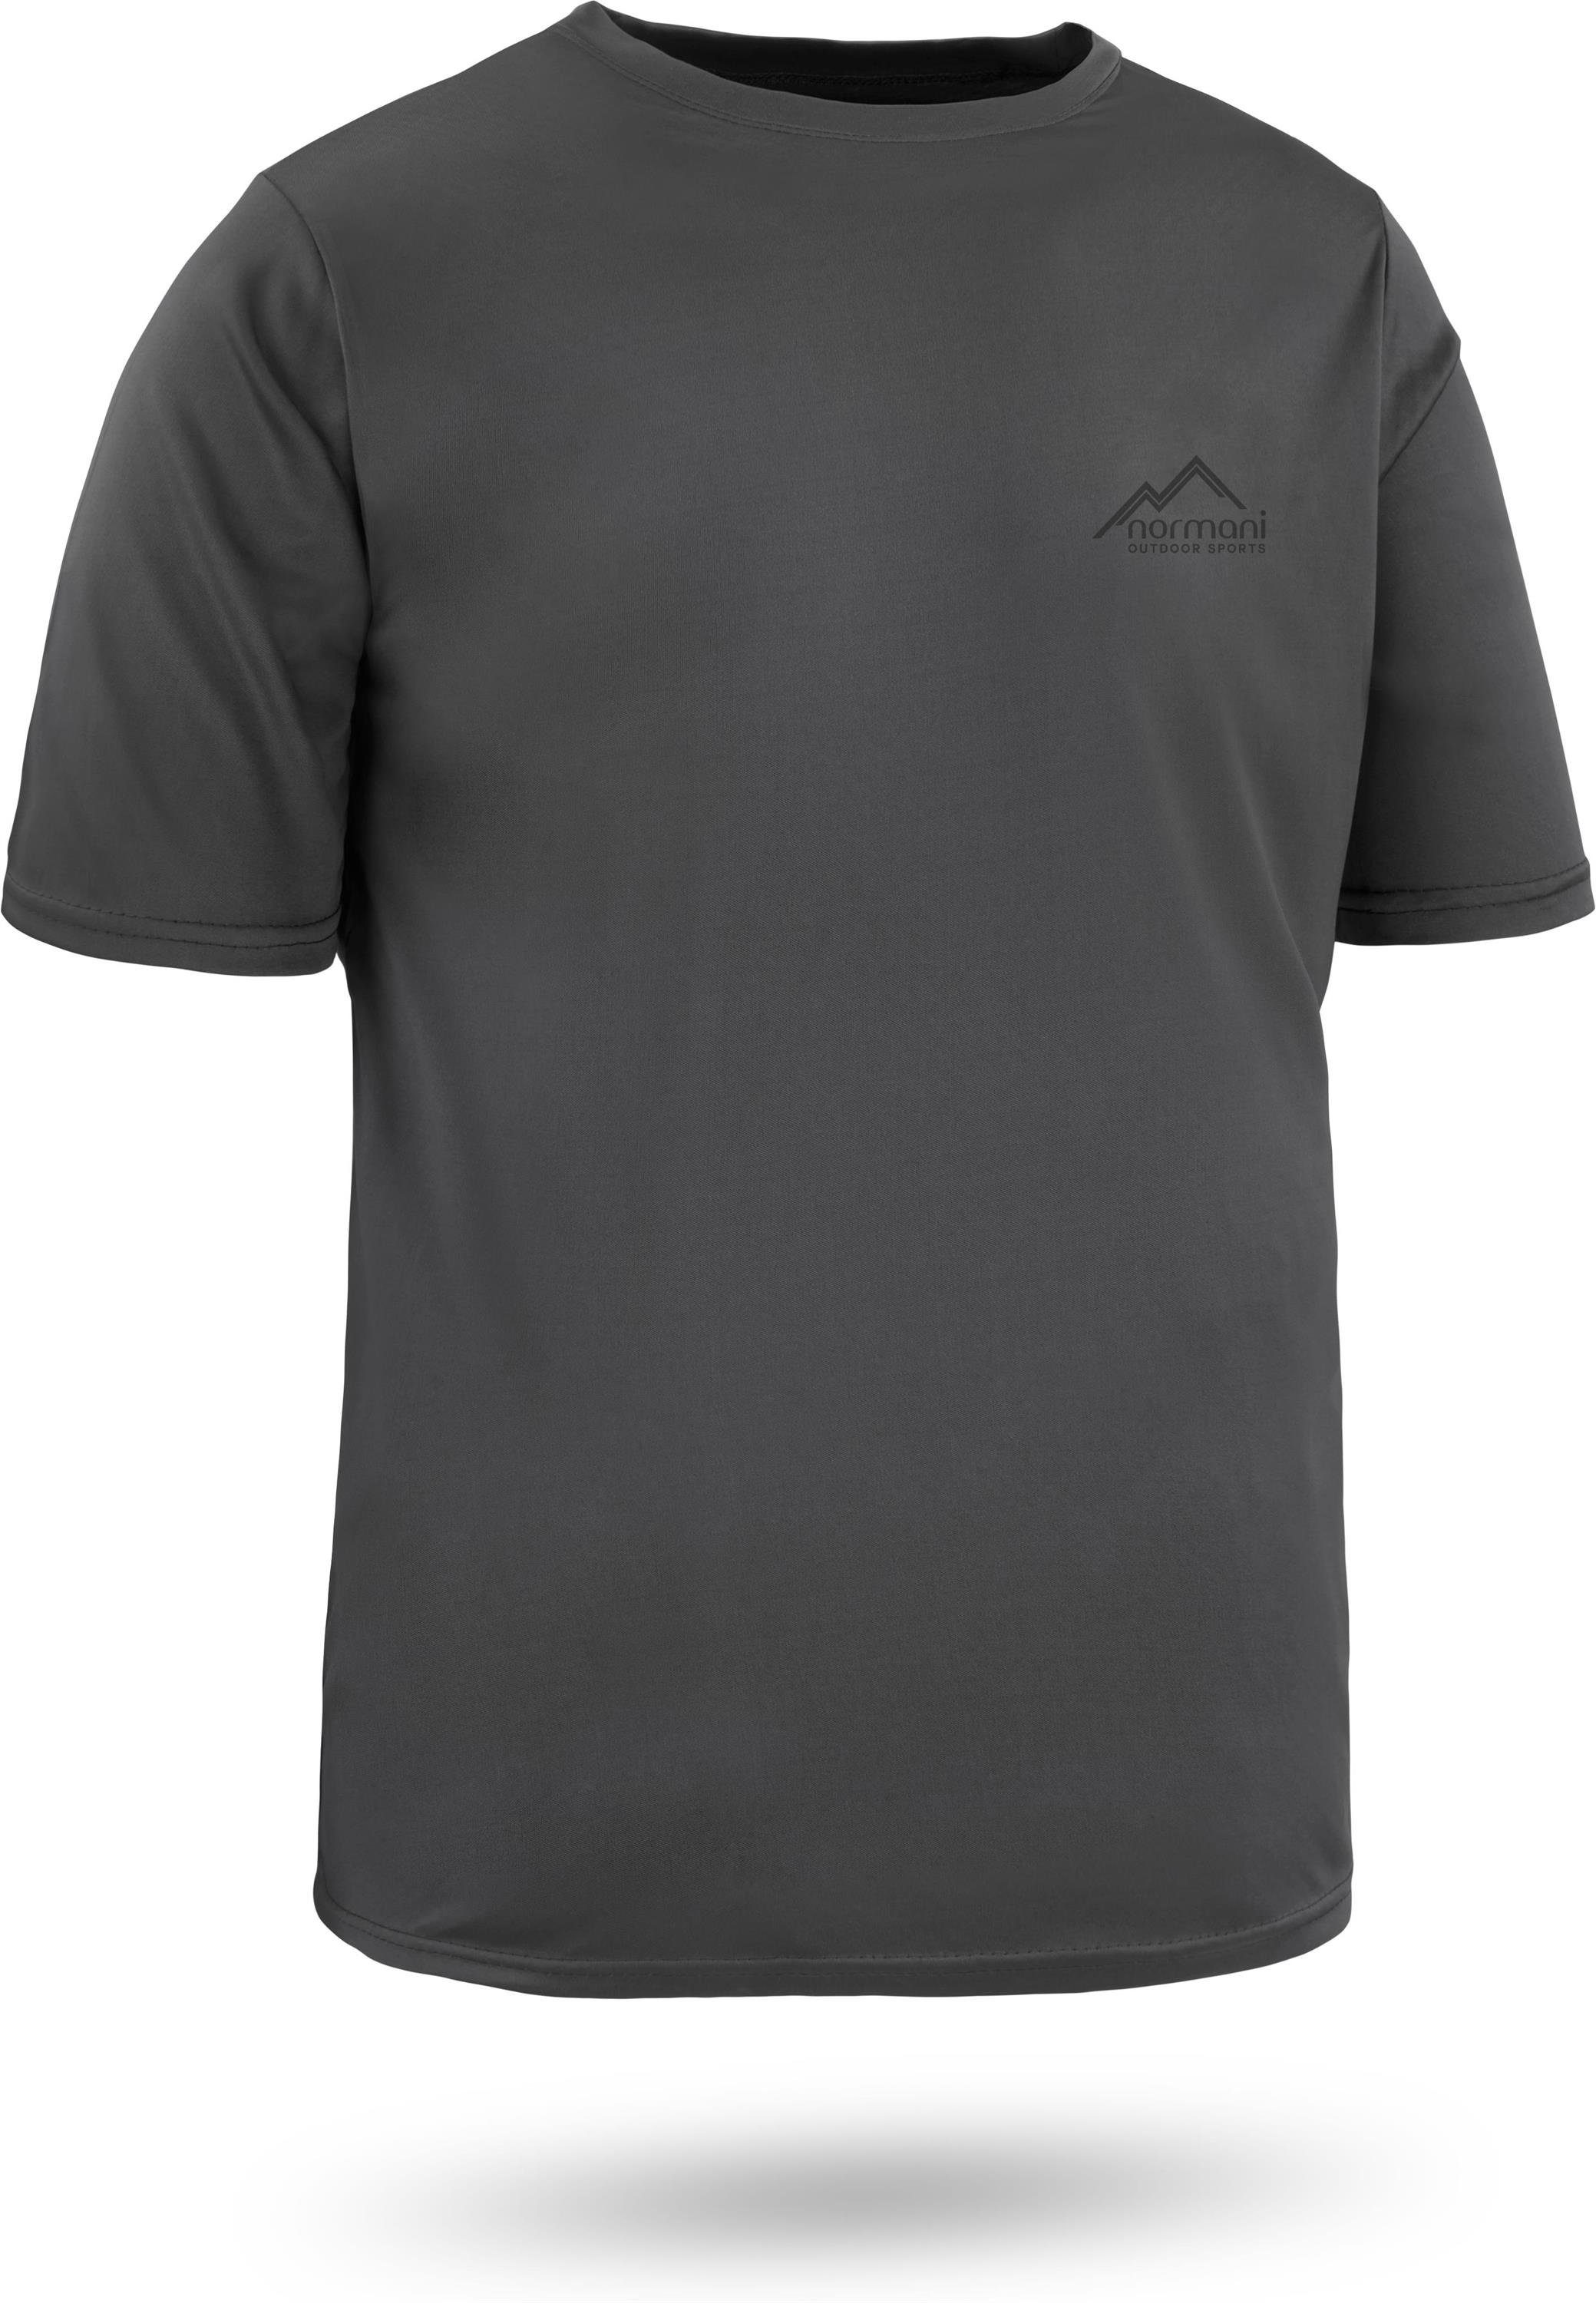 Shirt Funktions-Sport mt normani T-Shirt Cooling-Material Grau Fitness Kurzarm Herren Funktionsshirt Agra Sportswear